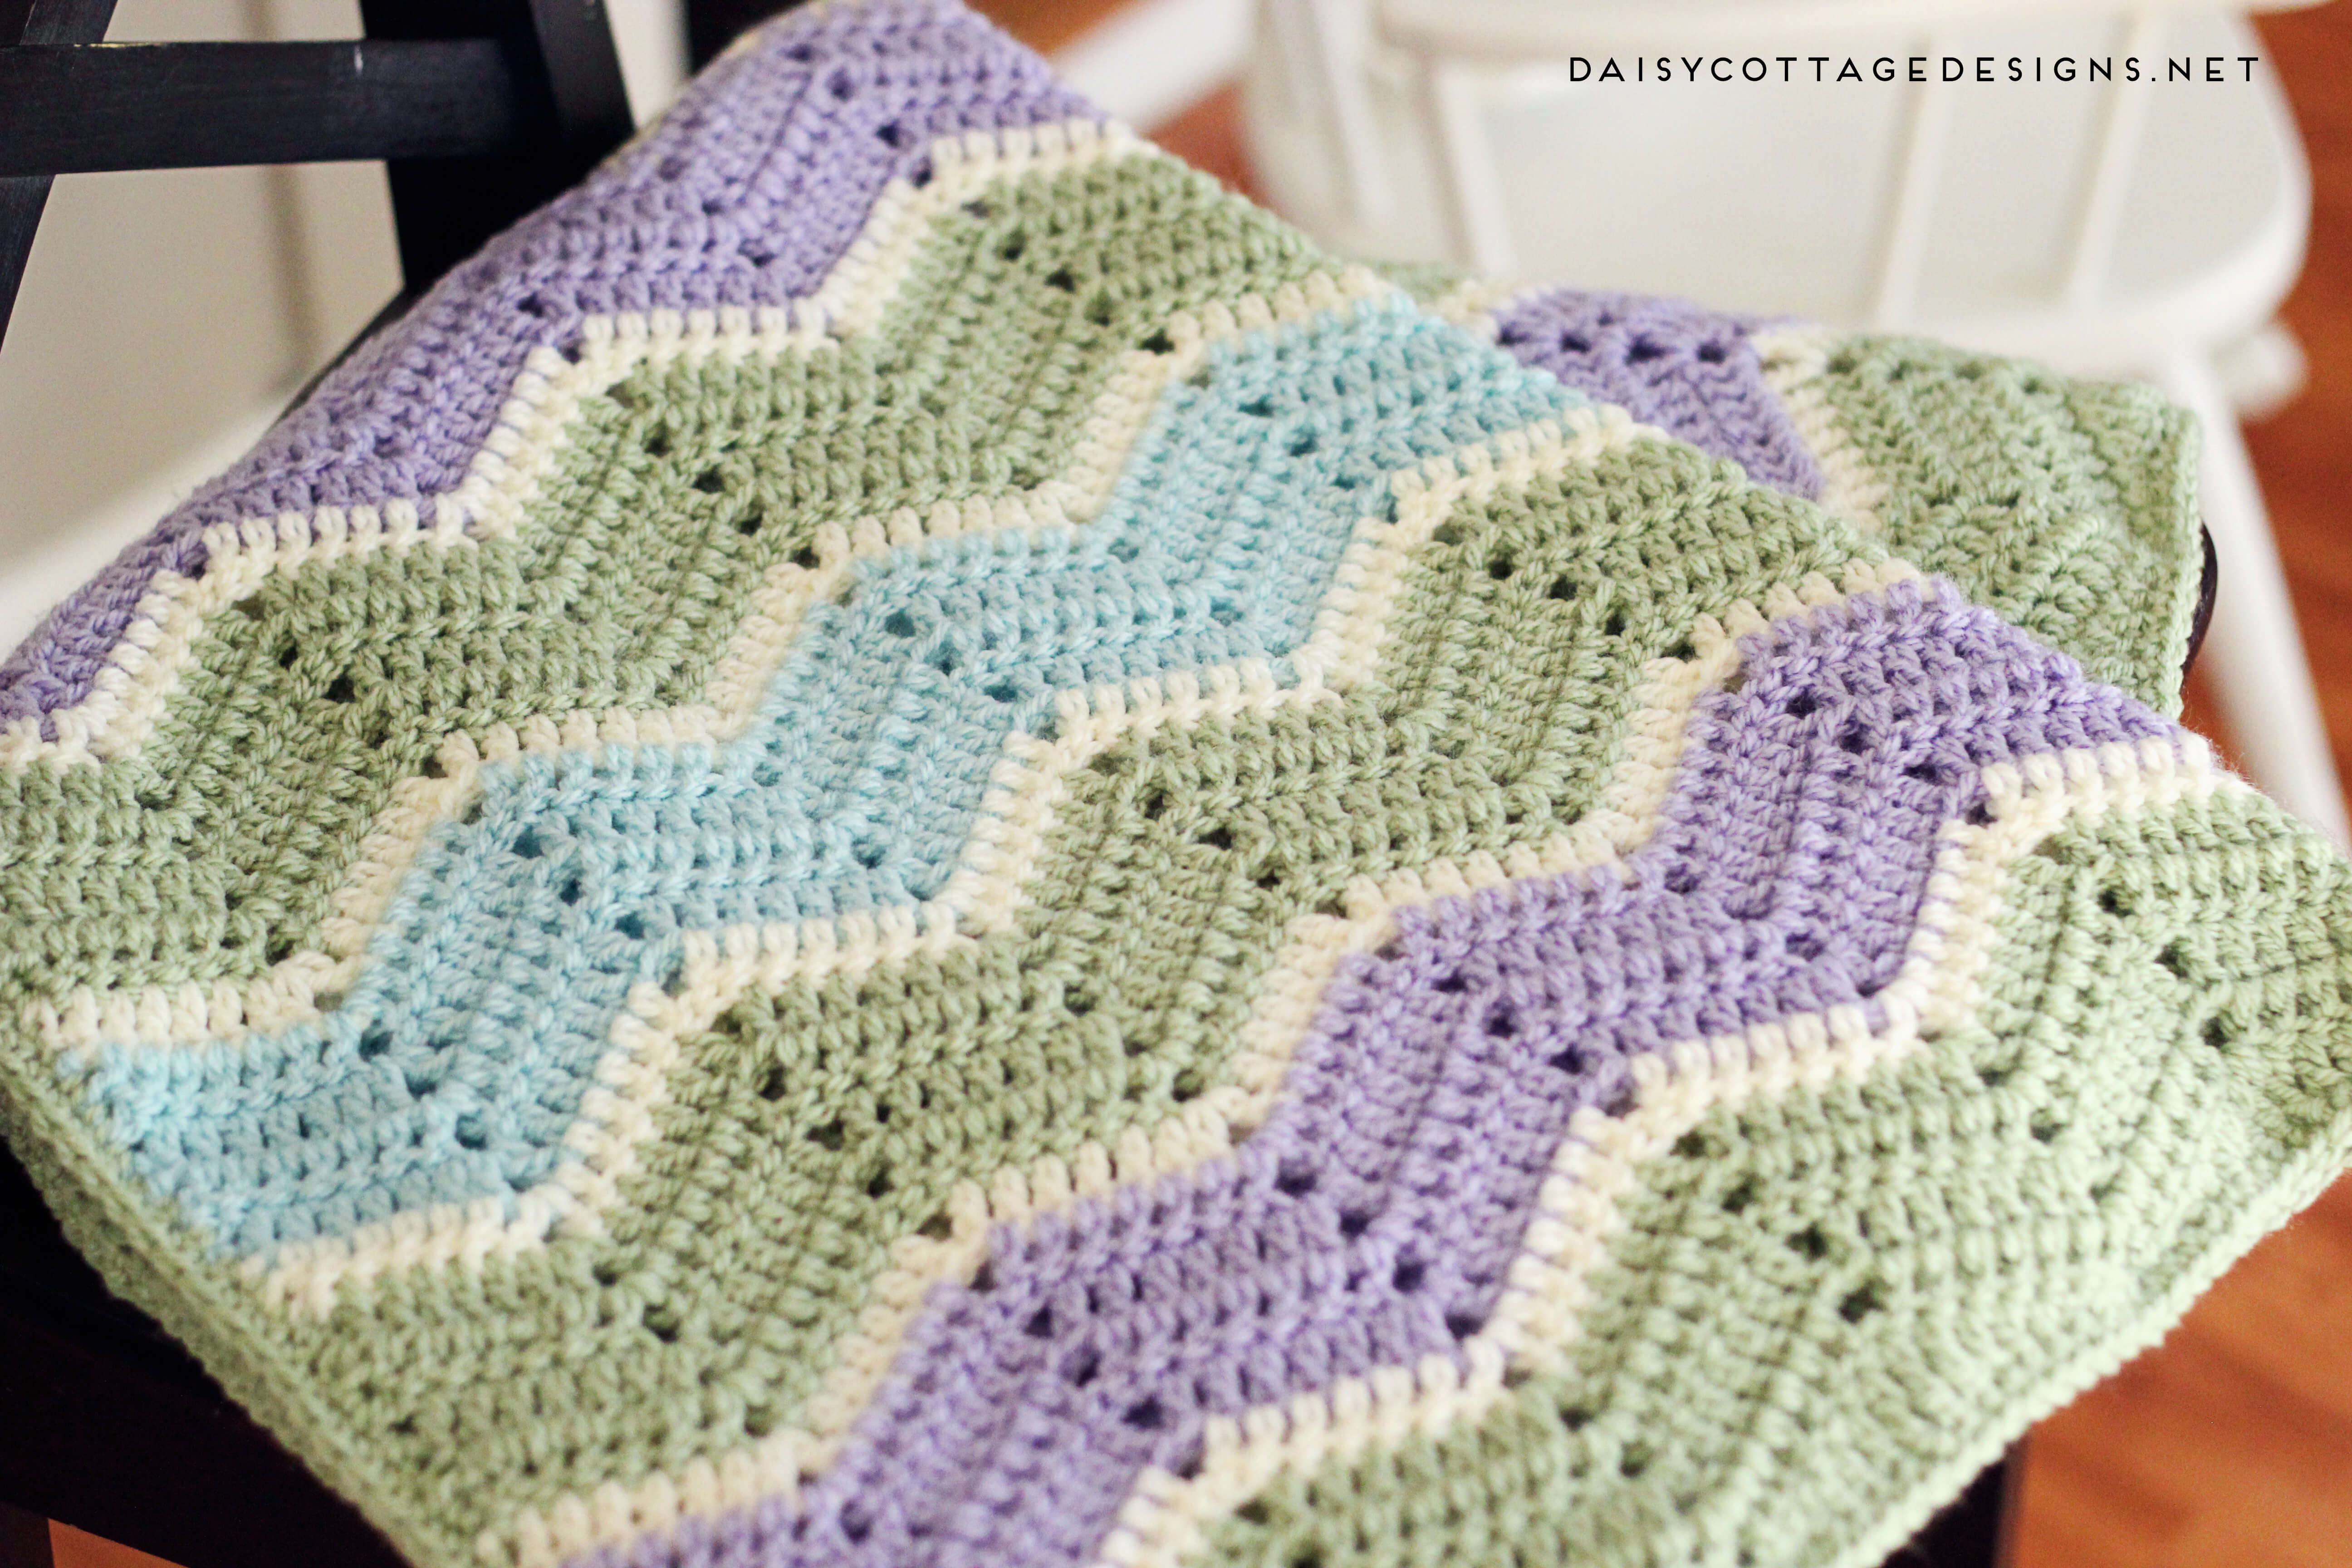 Crochet Throw Patterns Uk Ripple Blanket Crochet Pattern Daisy Cottage Designs